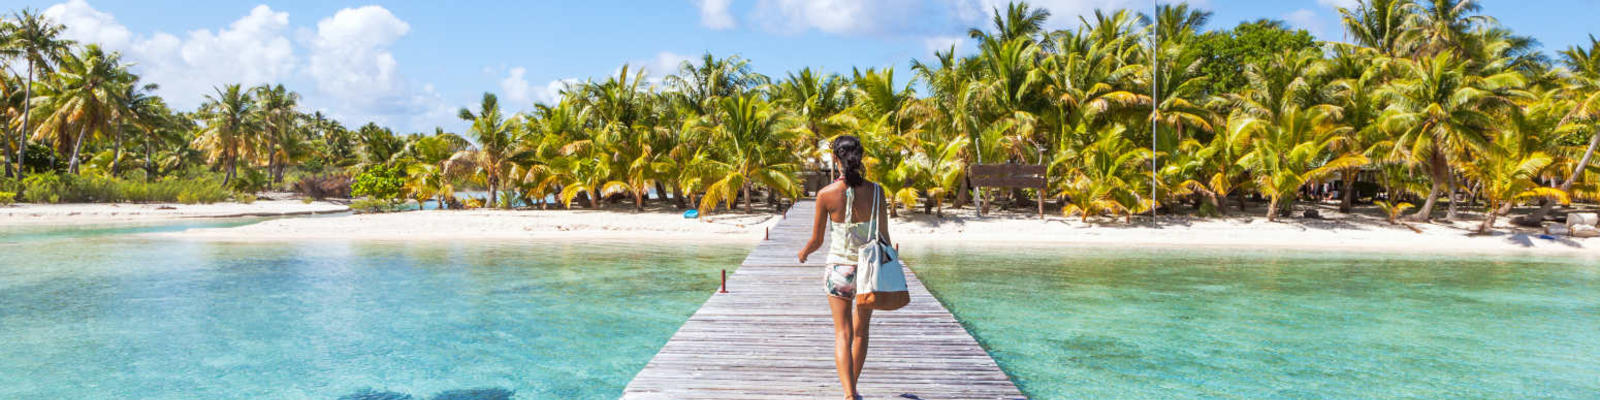 woman walking on boardwalk to tropical island